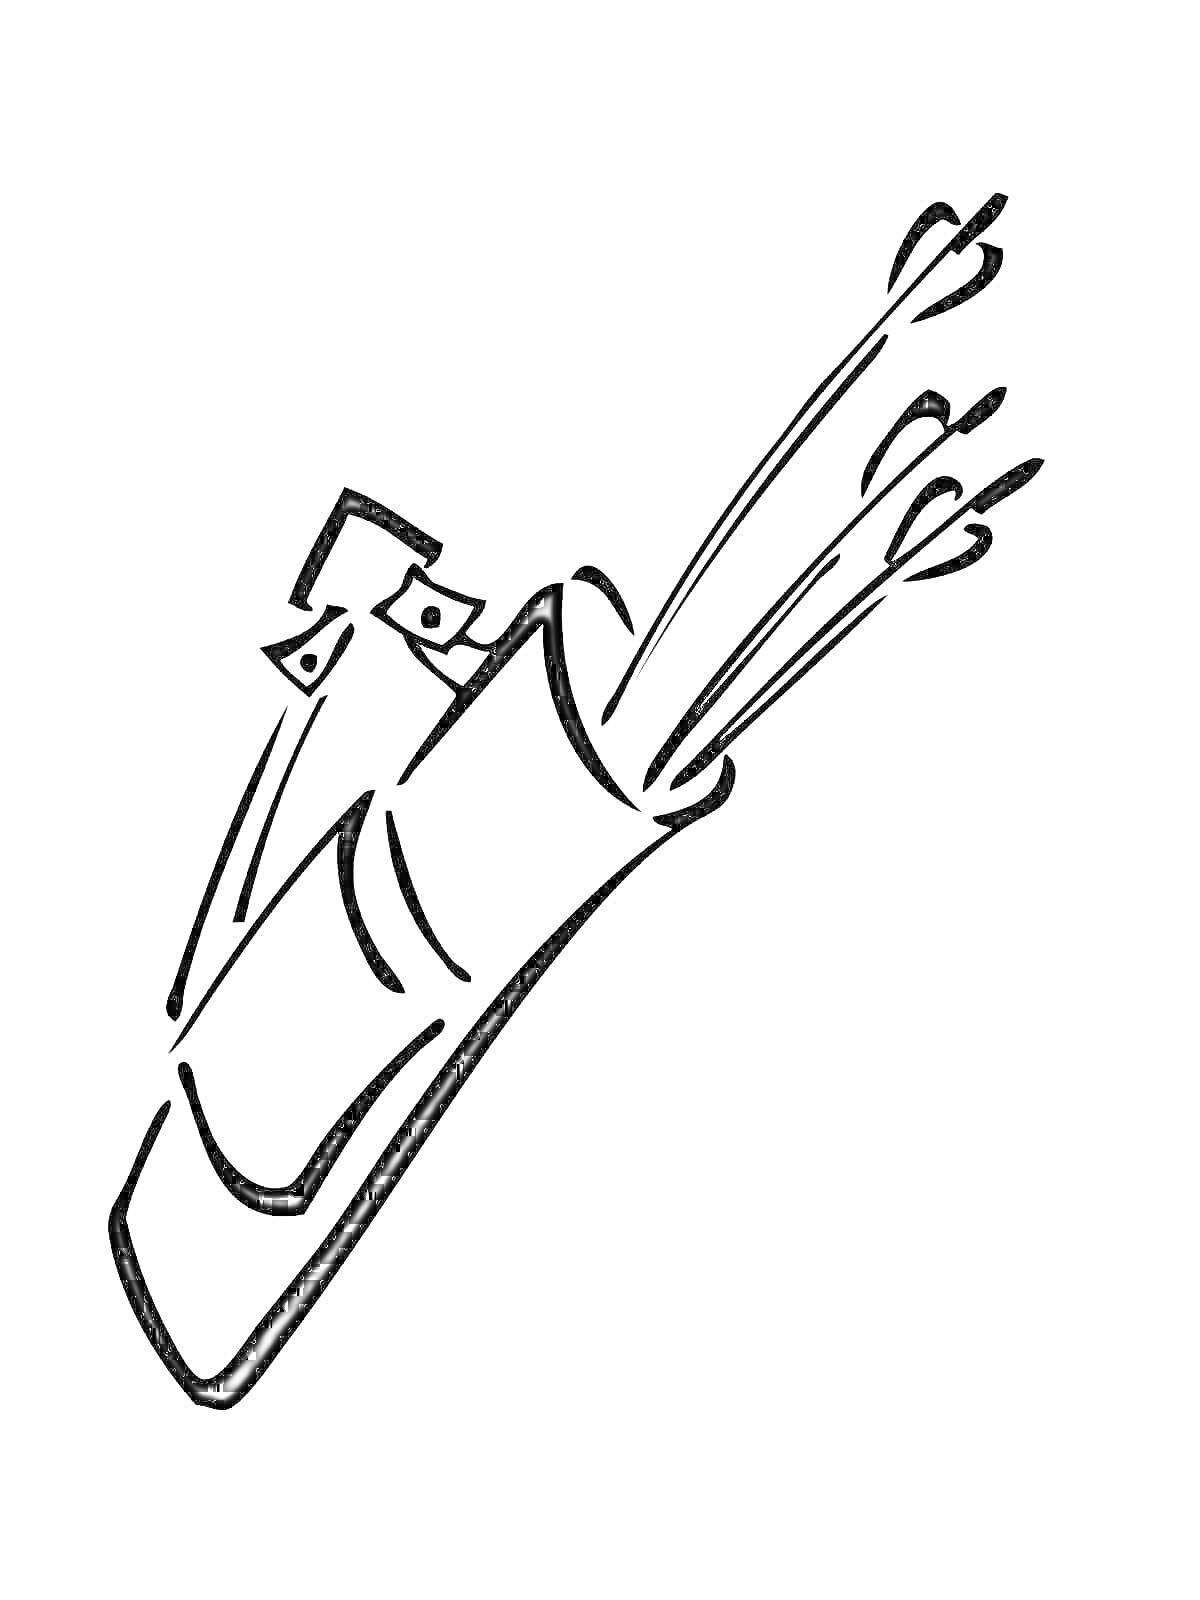 На раскраске изображено: Лук, Стрельба из лука, Оружие, Спорт, Охота